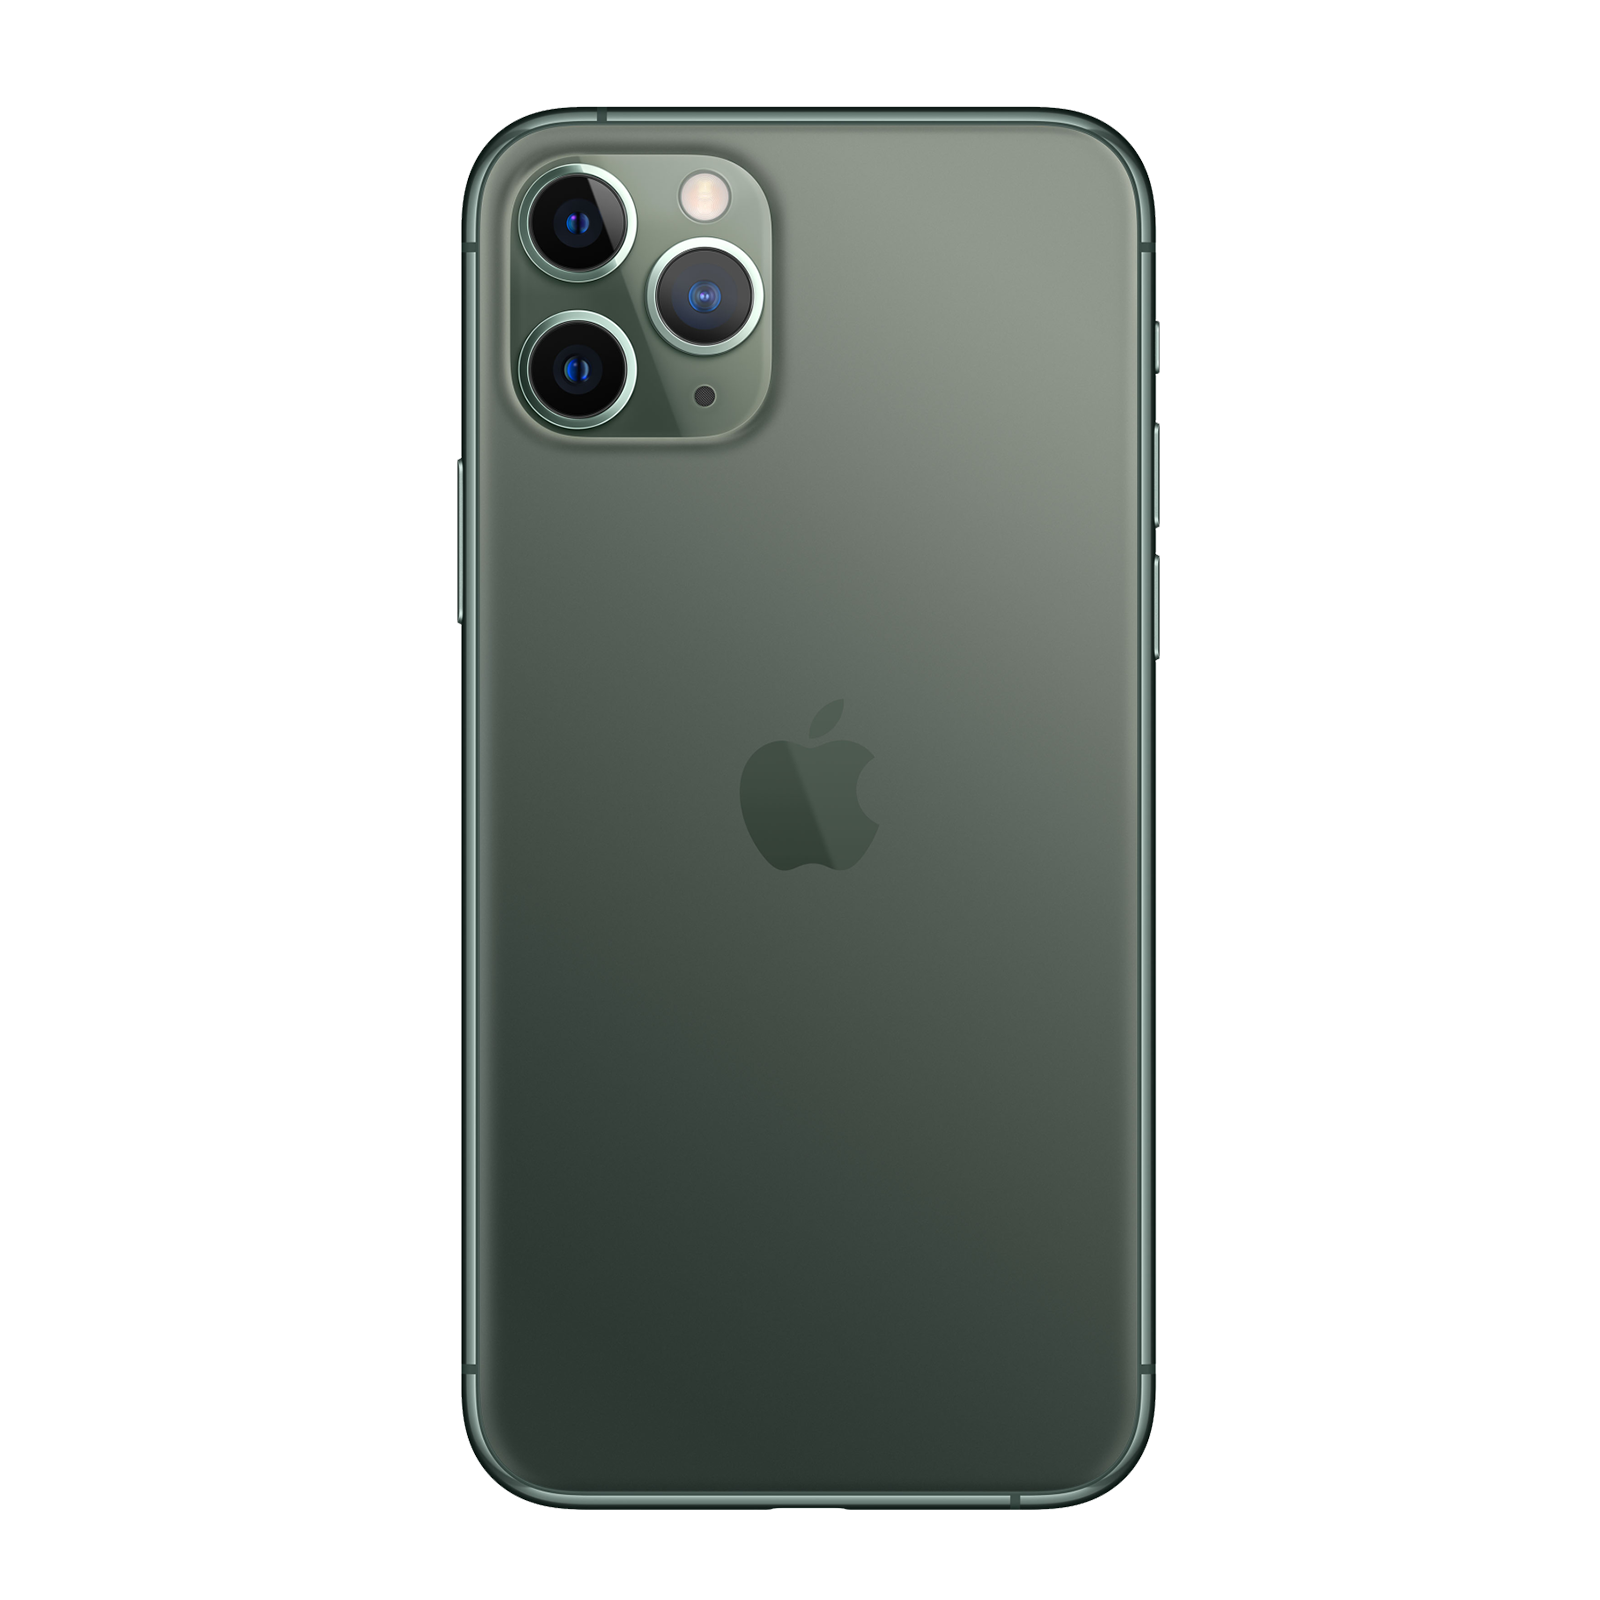 Apple iPhone 11 Pro Max 256GB Midnight Green Very Good - Unlocked